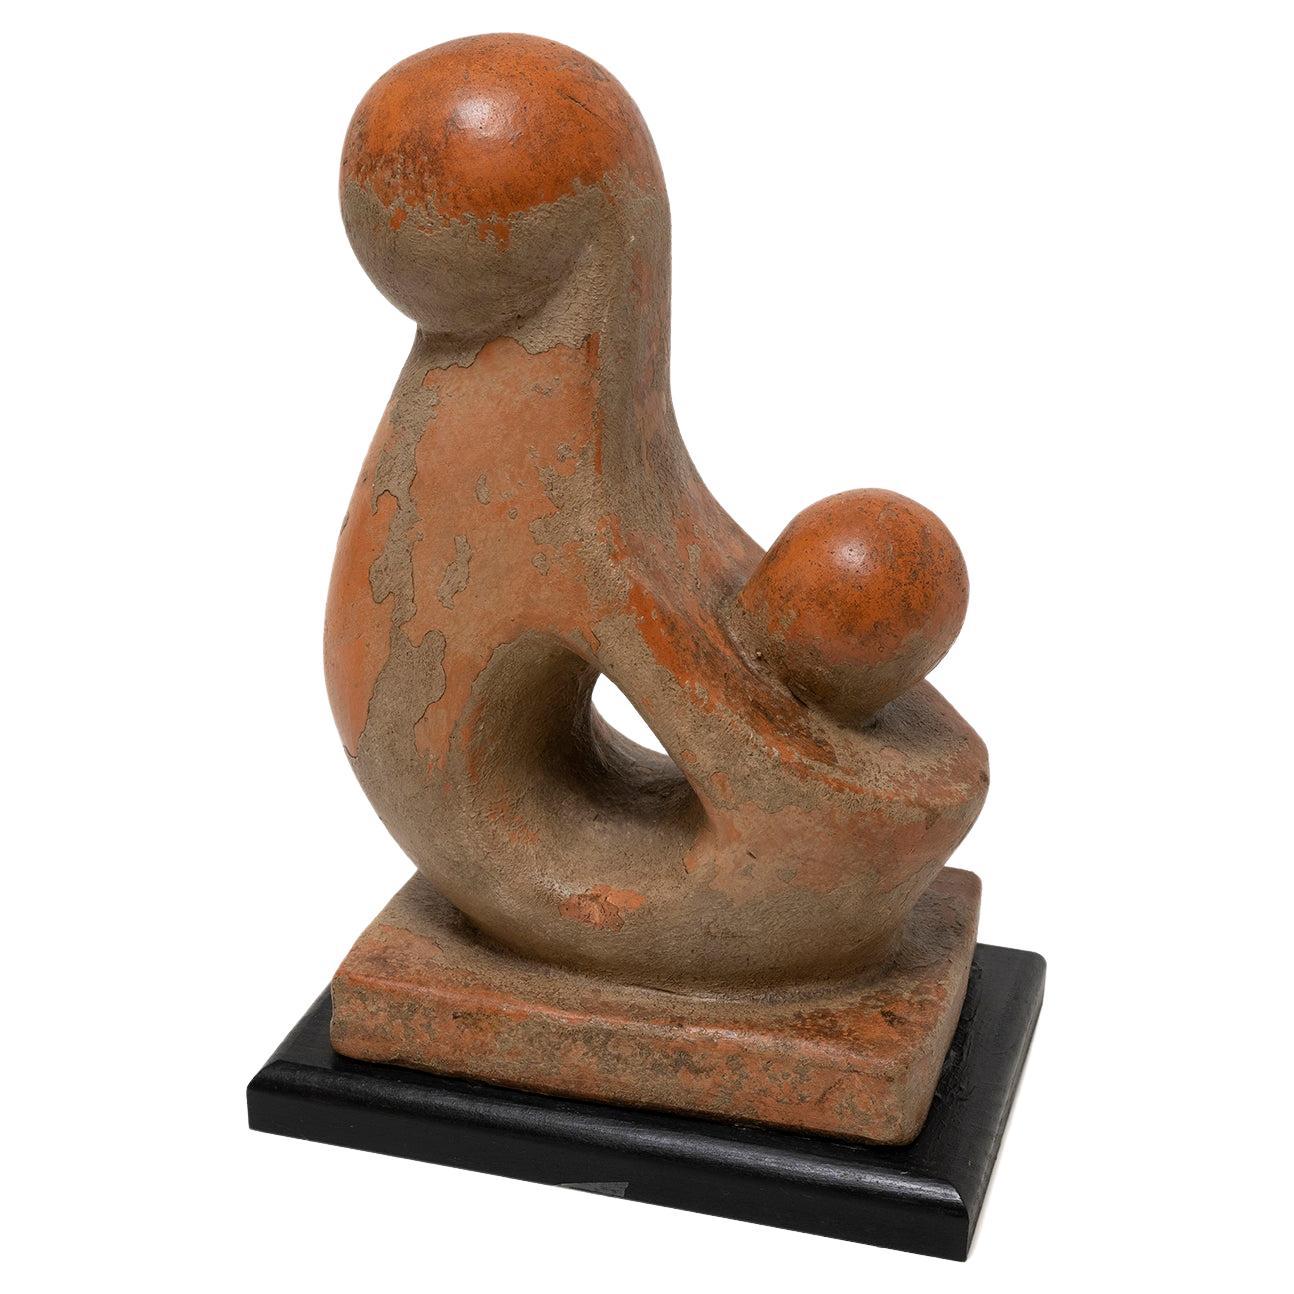 Sculpture Terracotta Stone Mother & Child Biomorphic 39cm 15 1/4 high